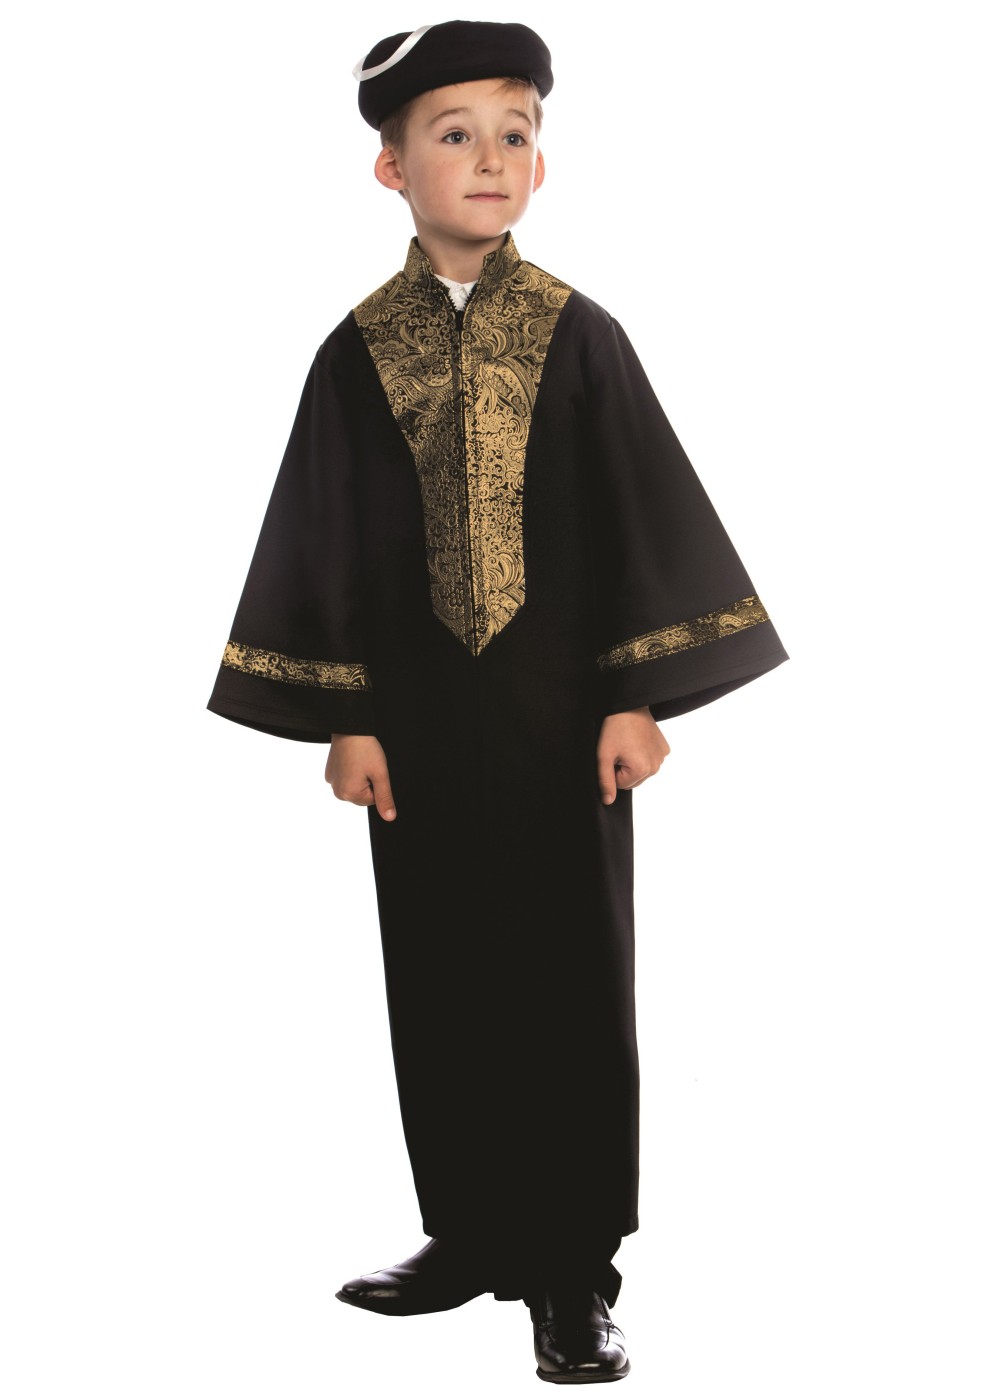 Sephardic Chacham Rabbi Boy Costume